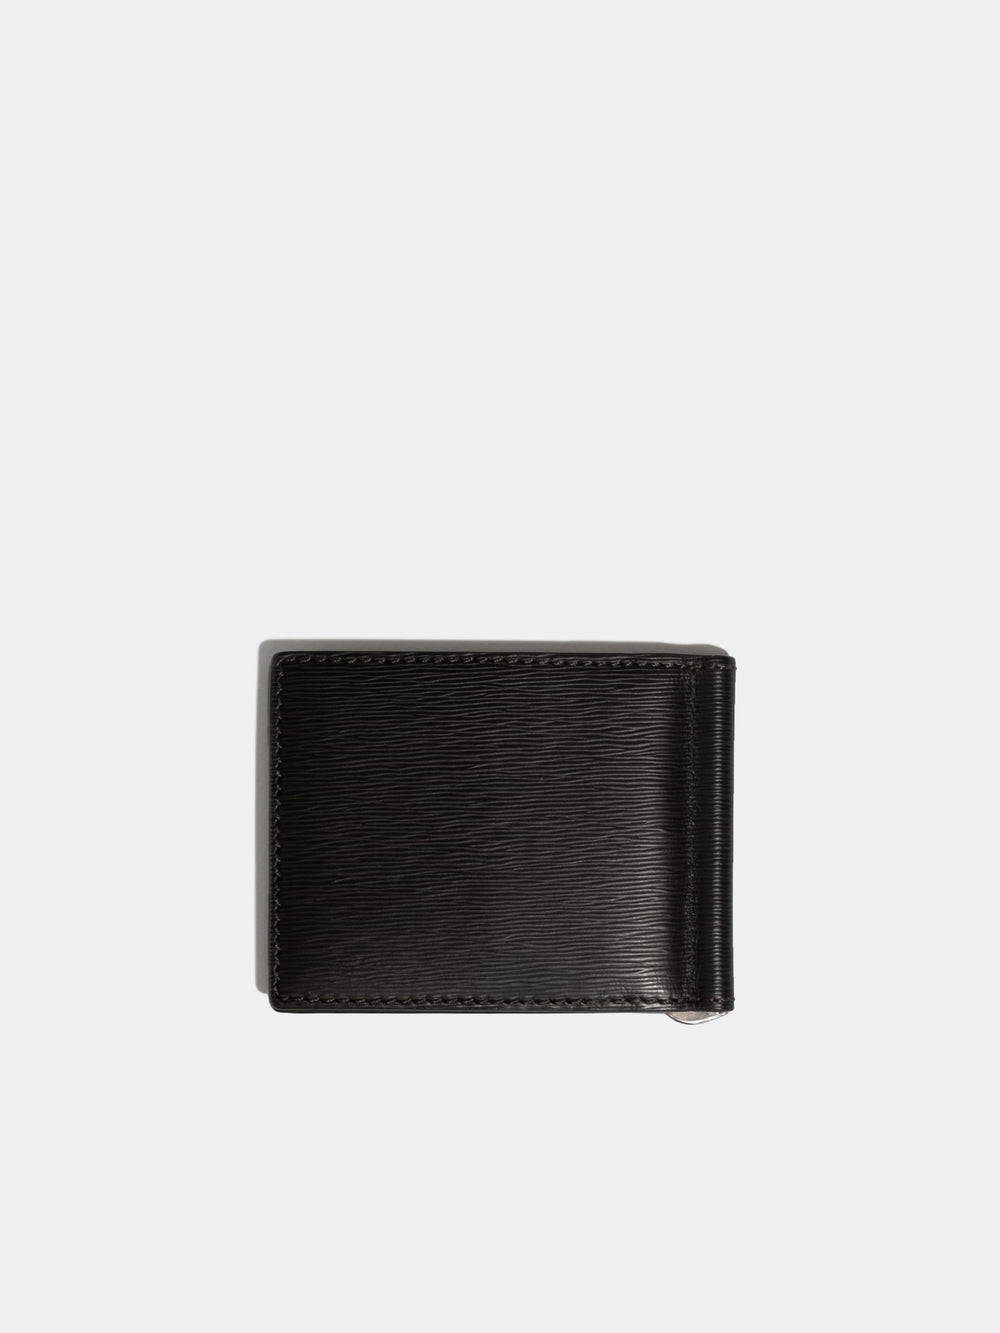 Black & White Leather Money clip Wallet